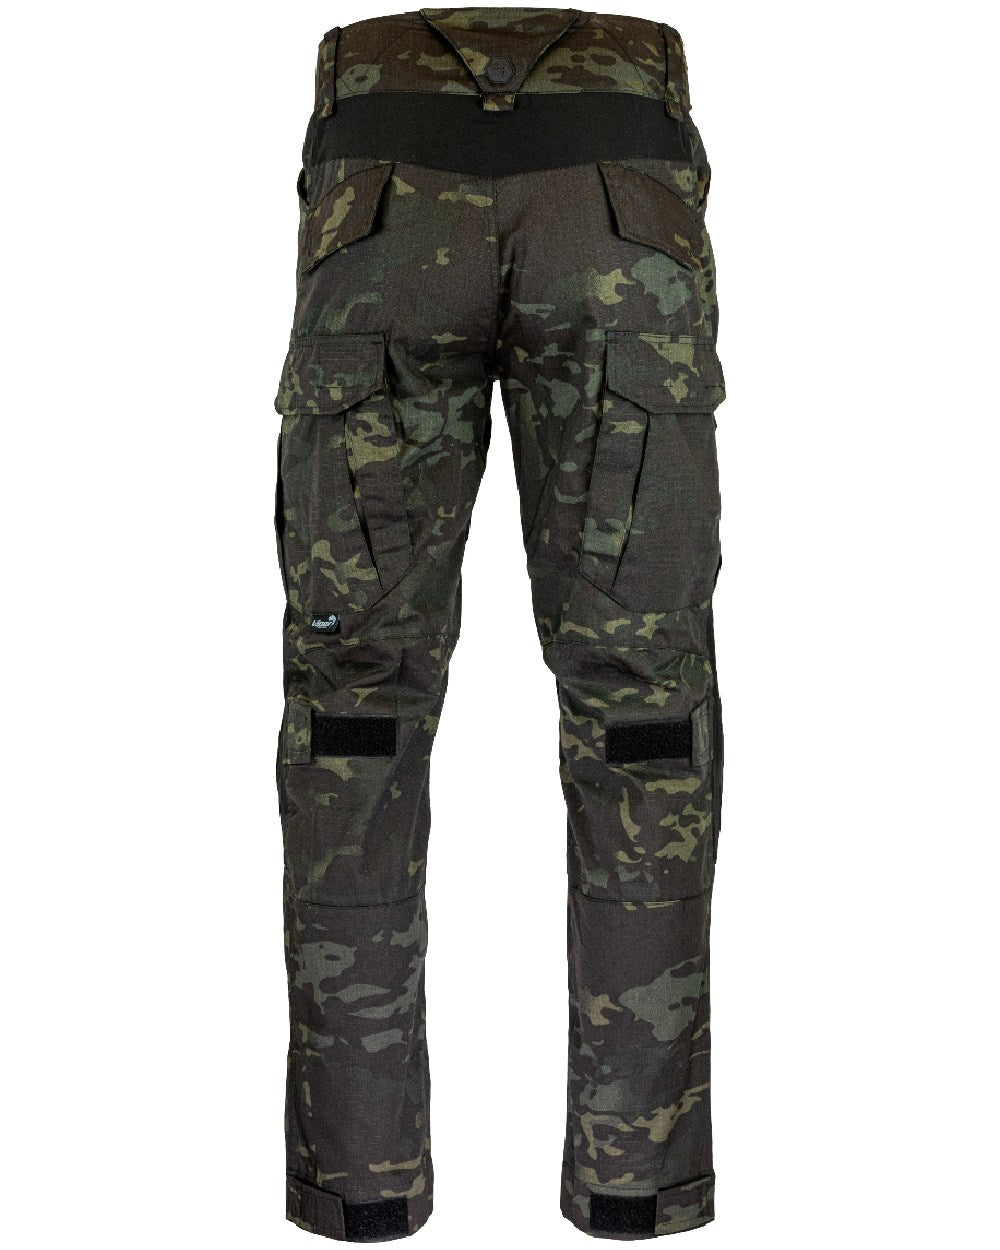 Viper Elite Trousers Gen2 in VCAM Black 